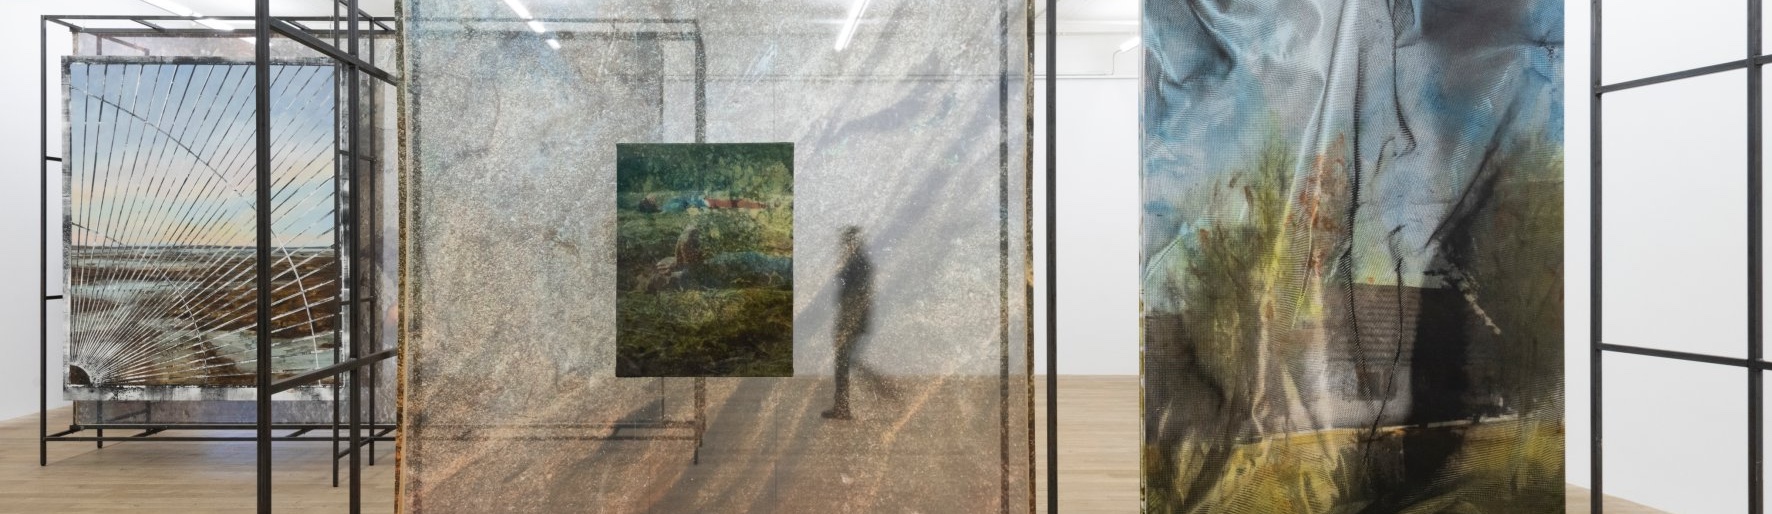 Slider image from our show of the day, Eva Nielsen: Limestone @ Galerie Peter Kilchmann, Zahnradstrasse